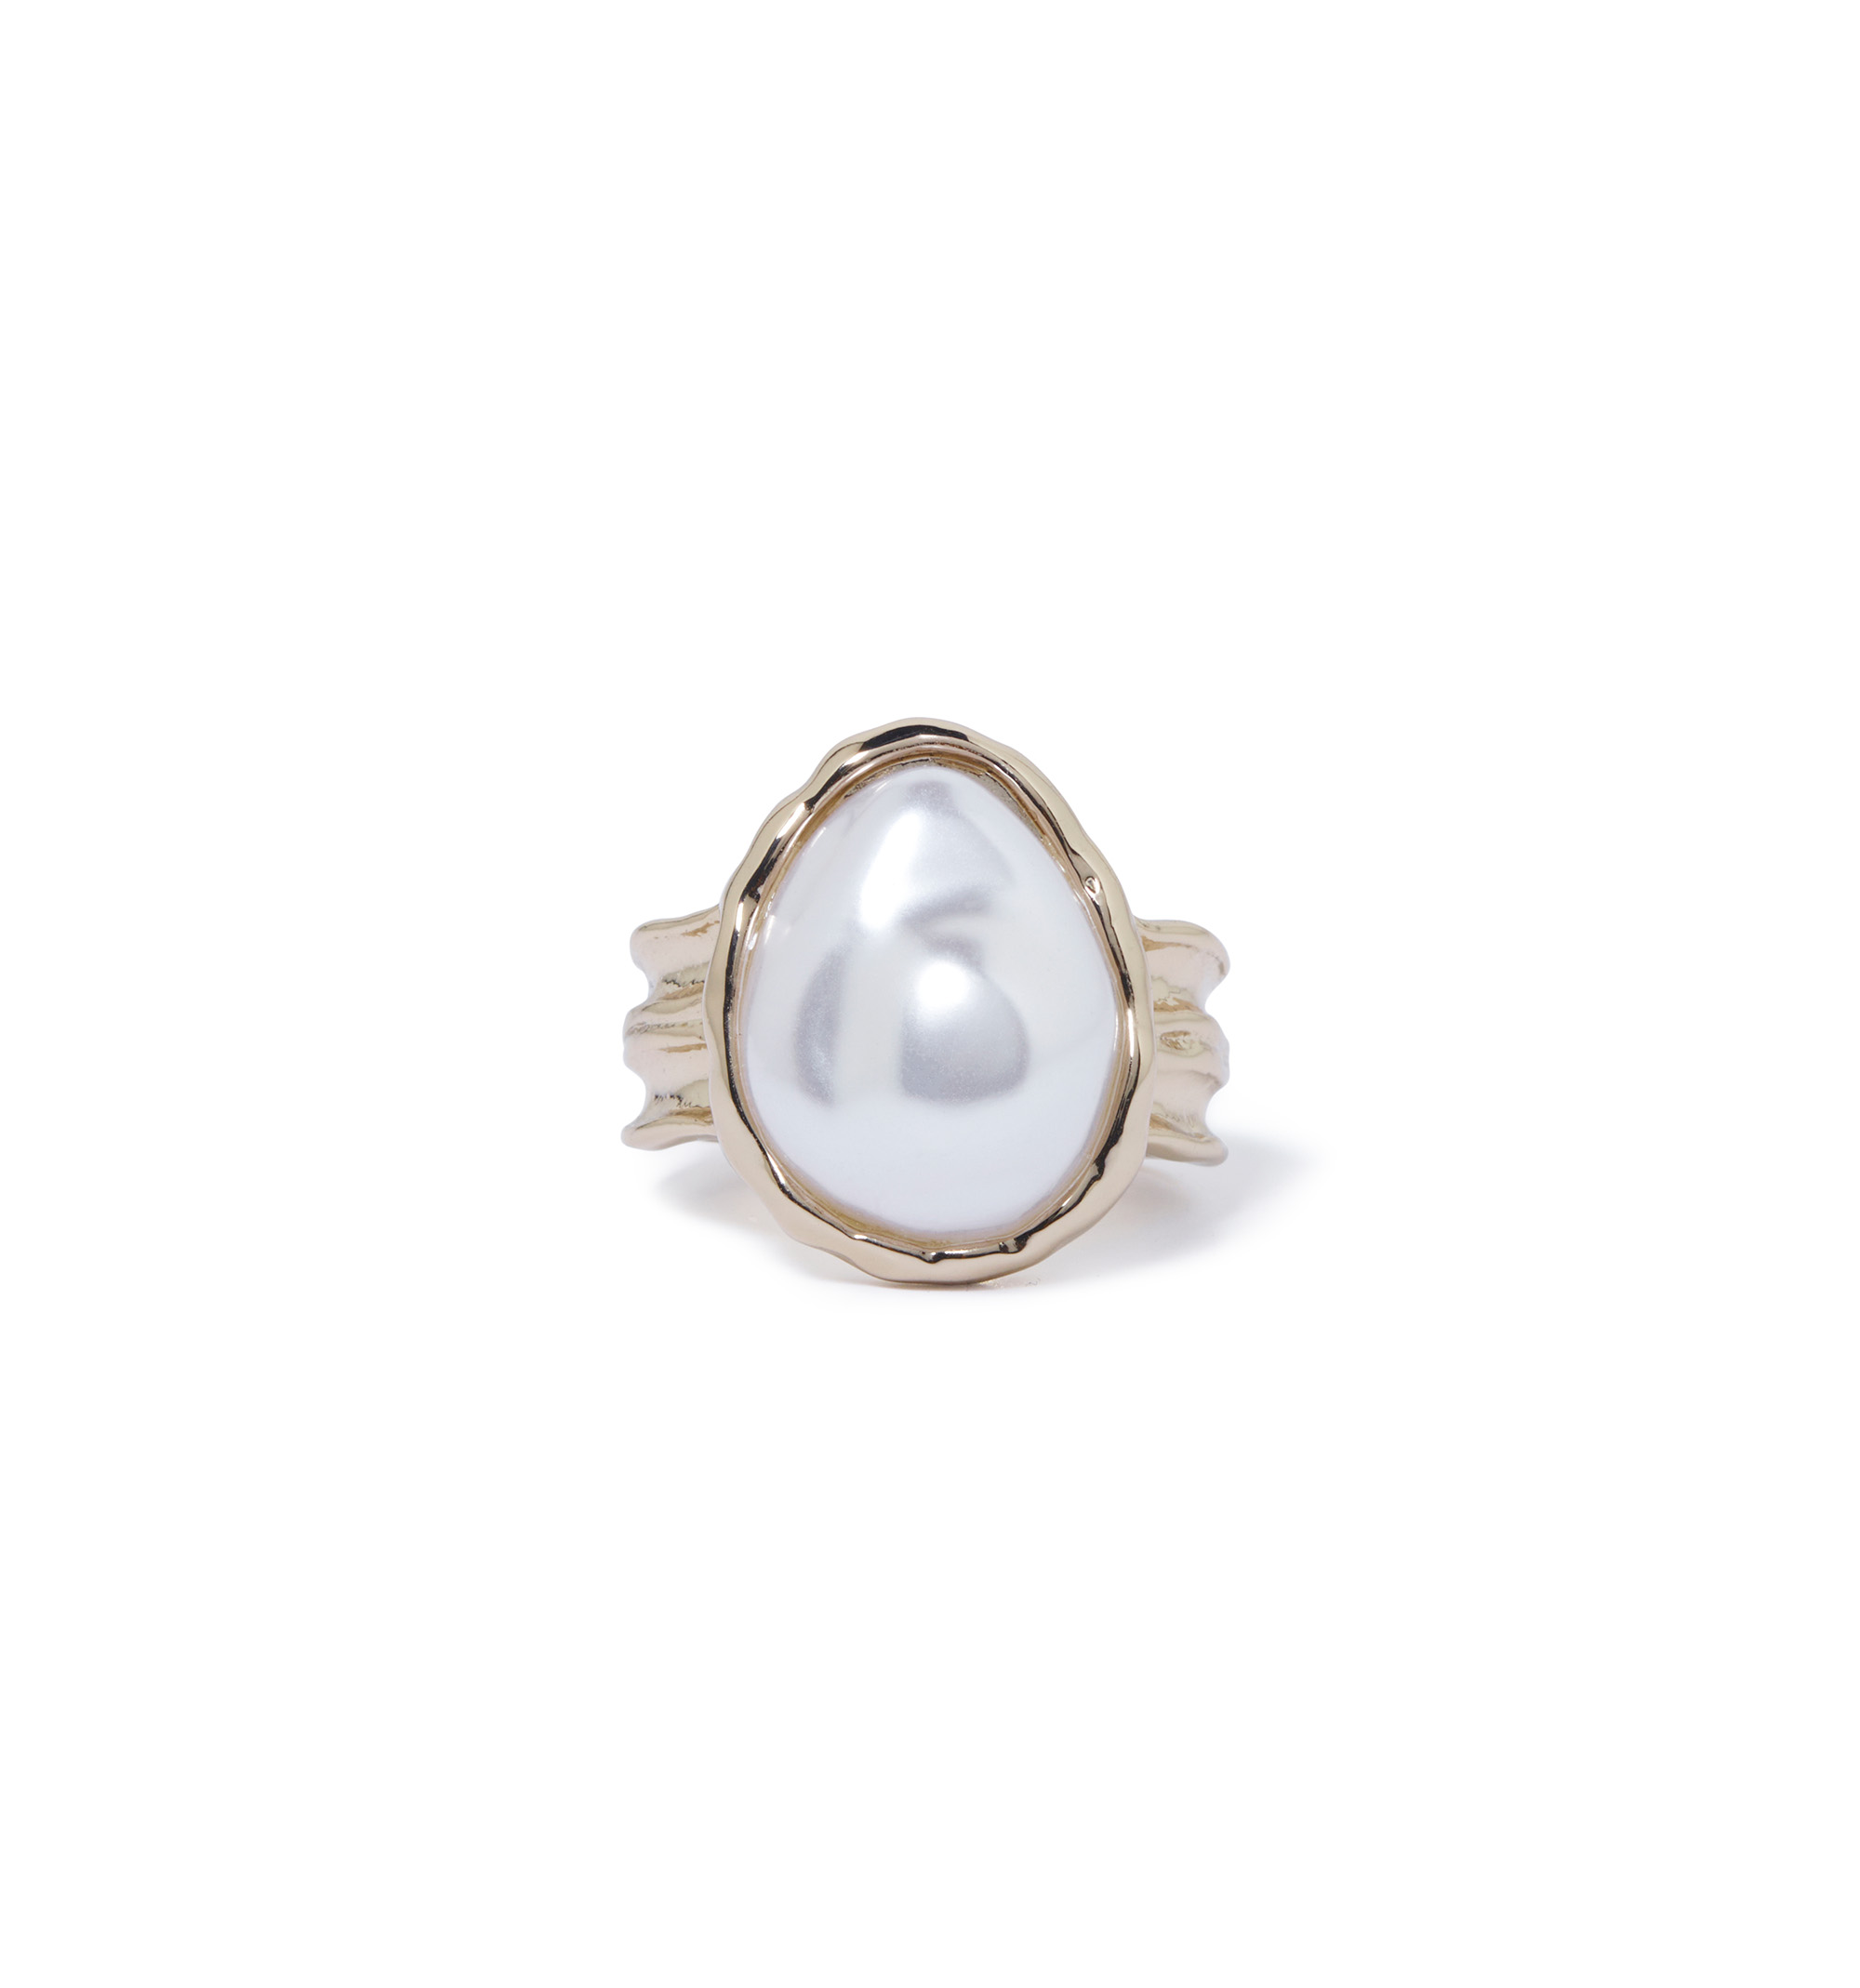 pearl stone, buy pearl online, south sea pearl, south sea moti, round pearl,  gemstones prices, pearl stone benefits – CLARA